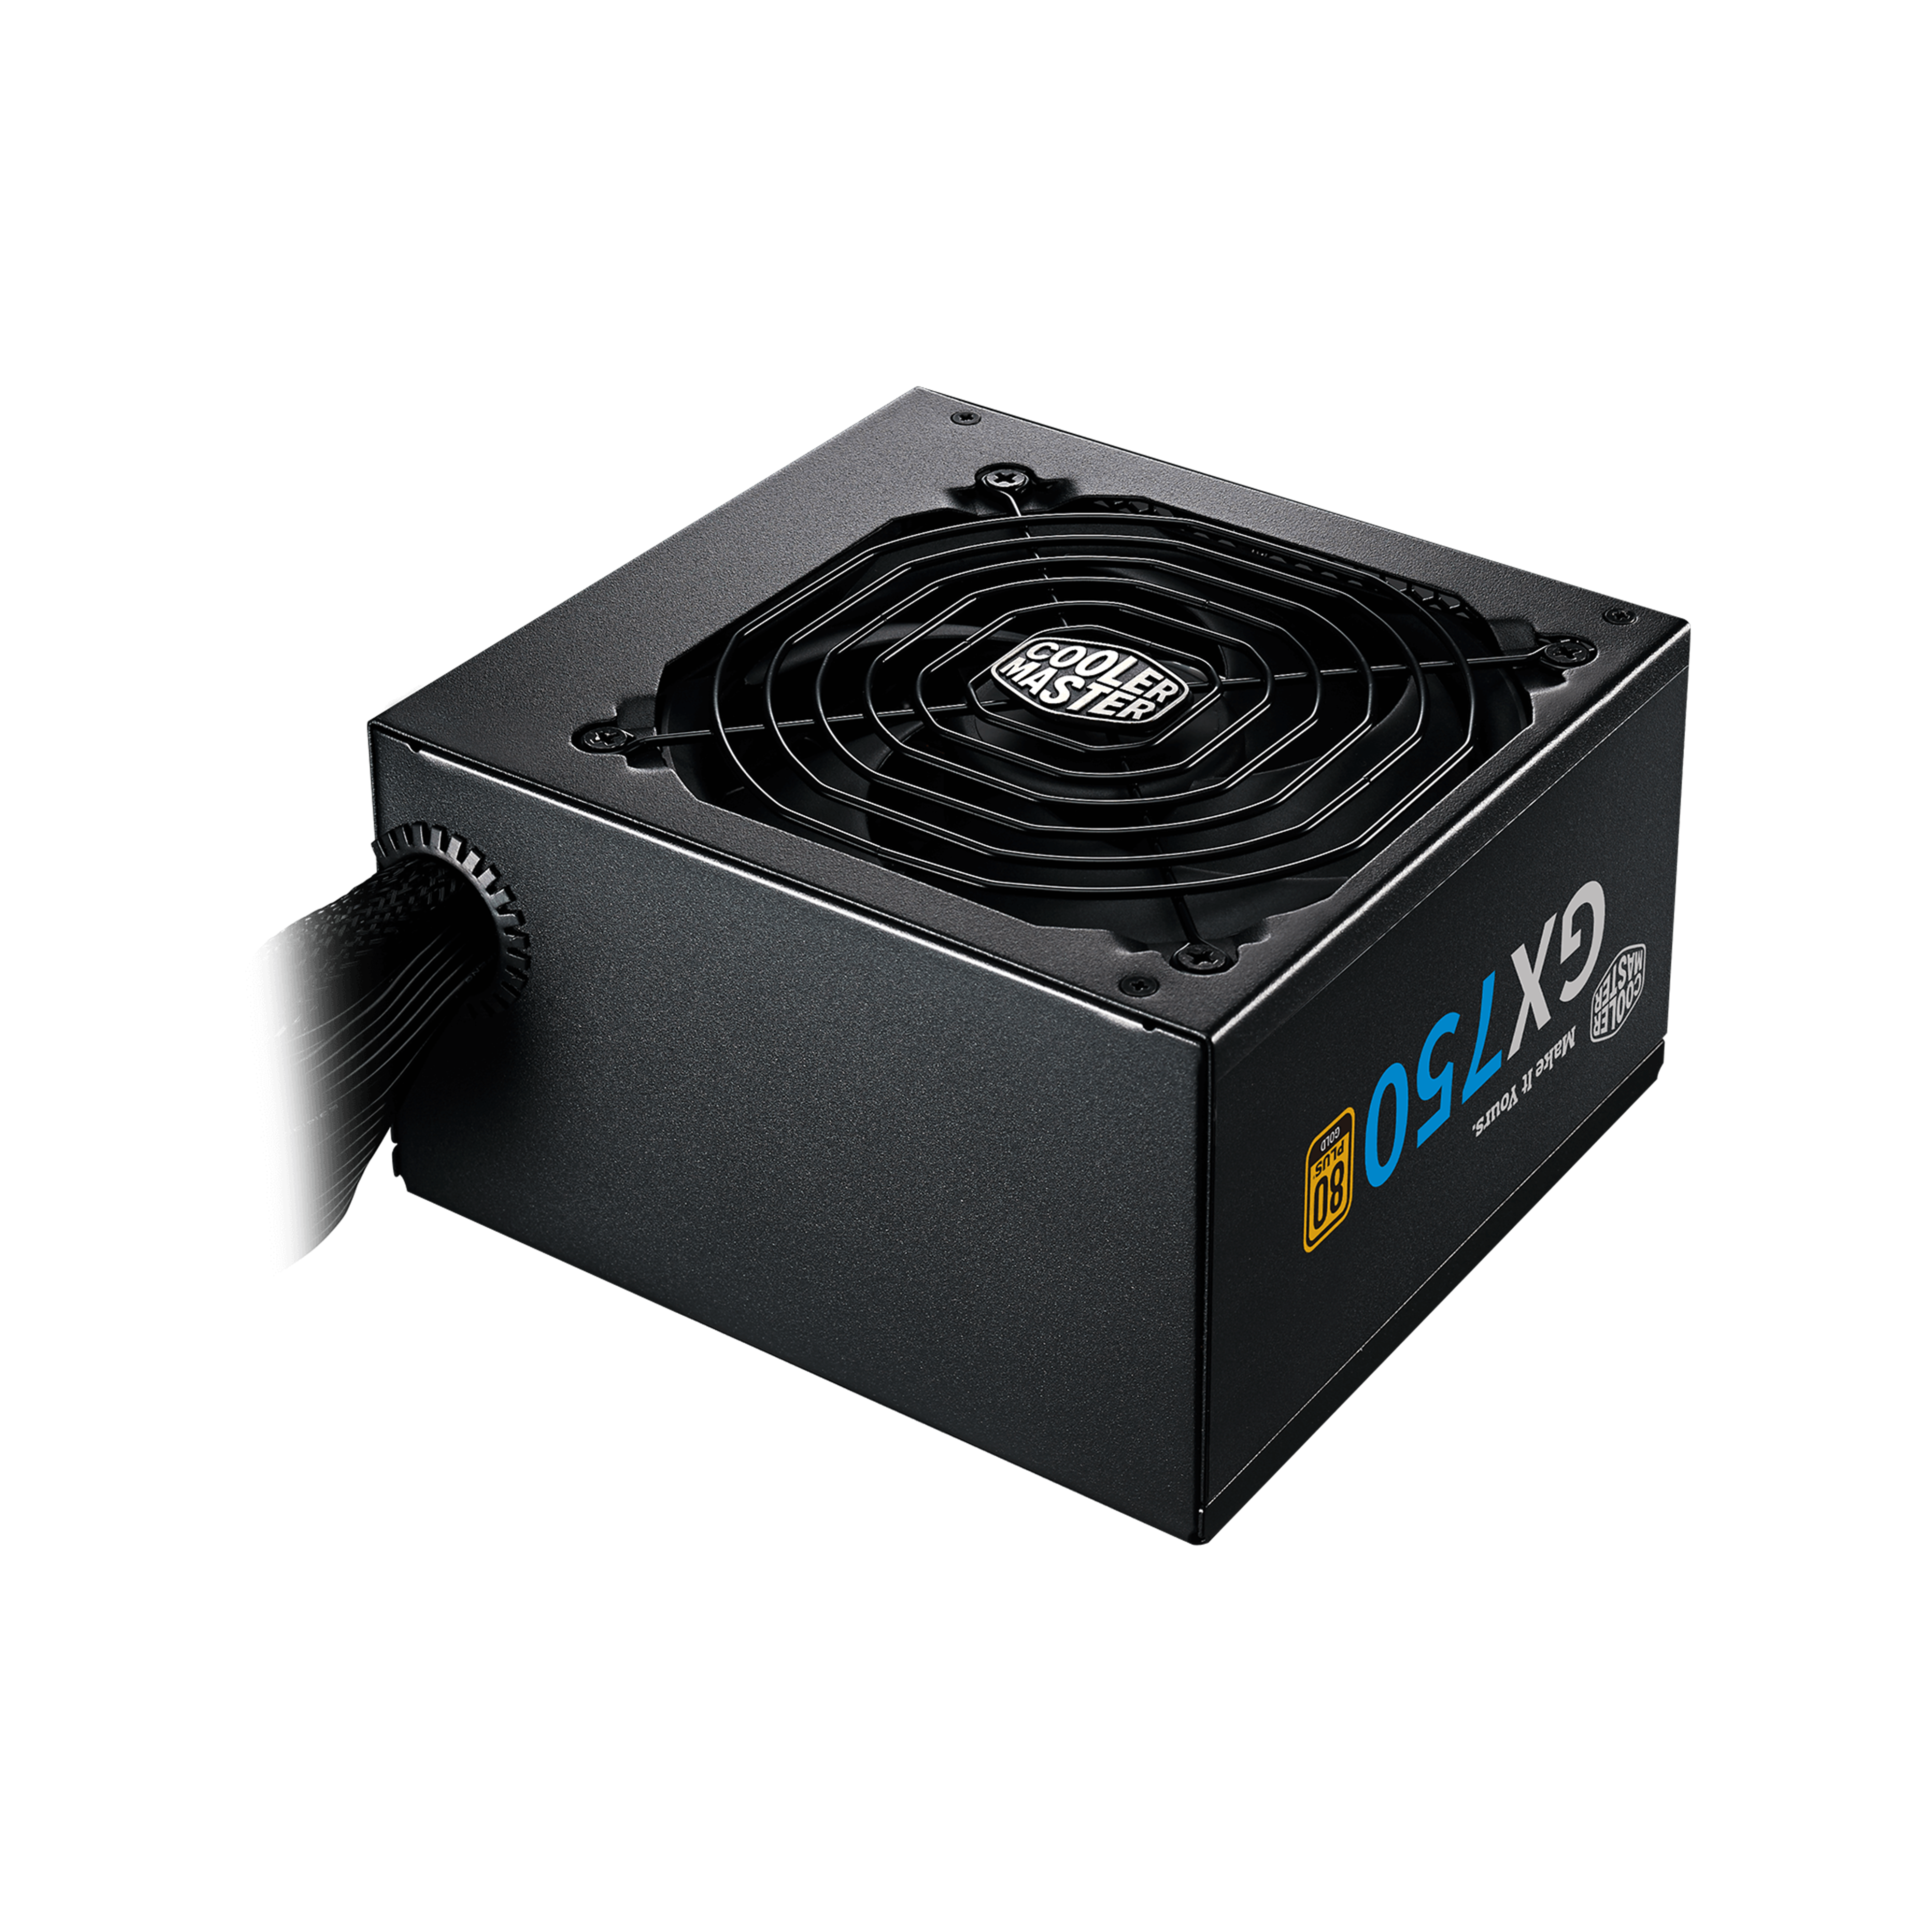 New Cooler Master GX II Pro 750W 80 PLUS Bronze Power Supply PSU RS-750-ACAA-B1 